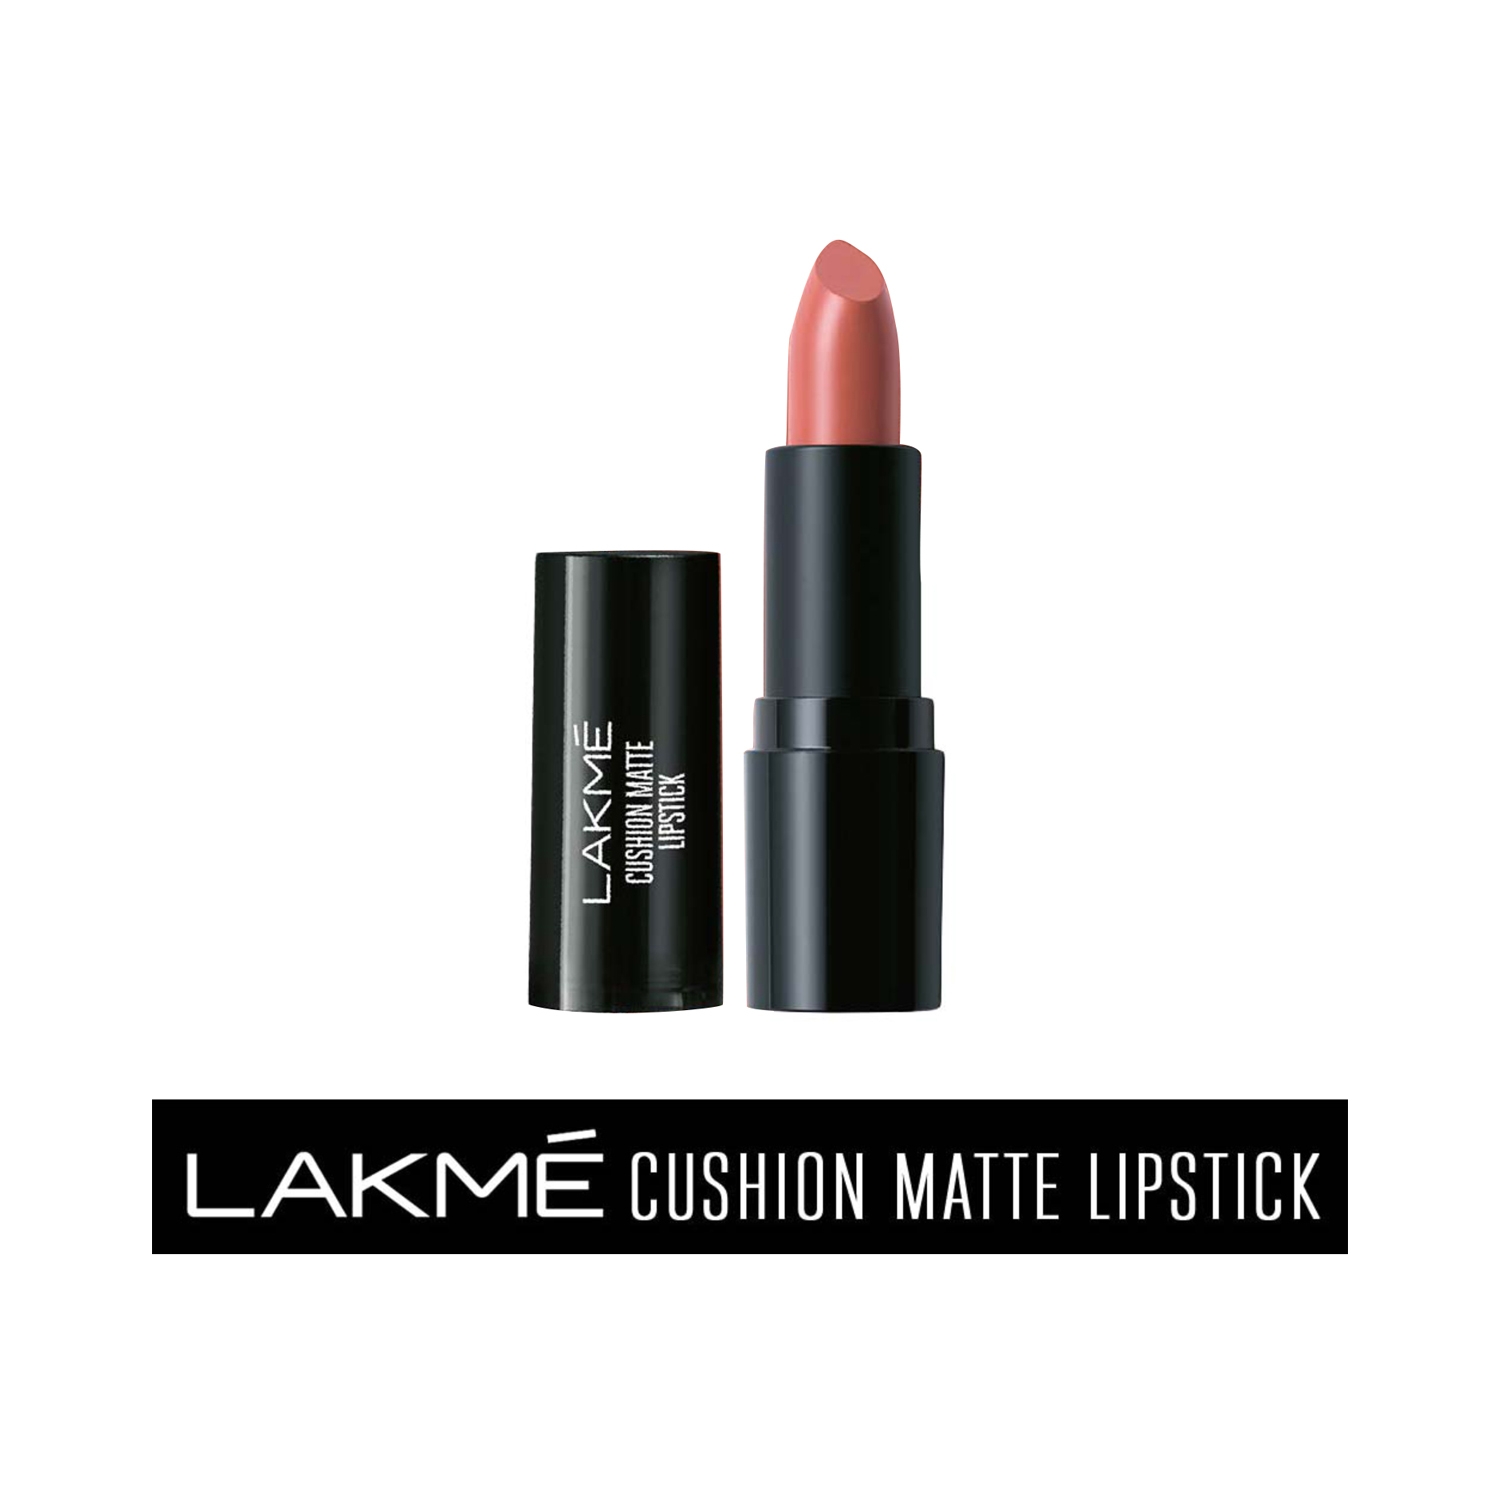 Lakme | Lakme Cushion Matte Lipstick - Pink Blush (4.5g)